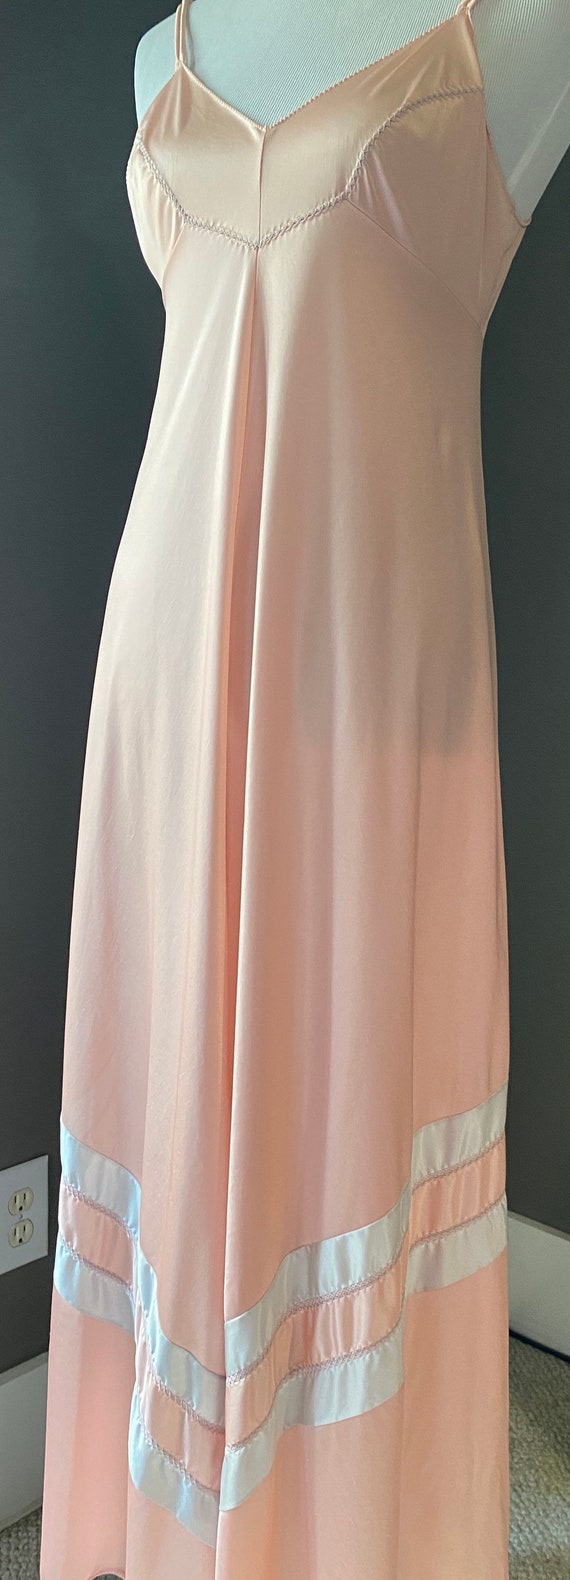 Vassarette Long Slip Dress, size M-L - image 2